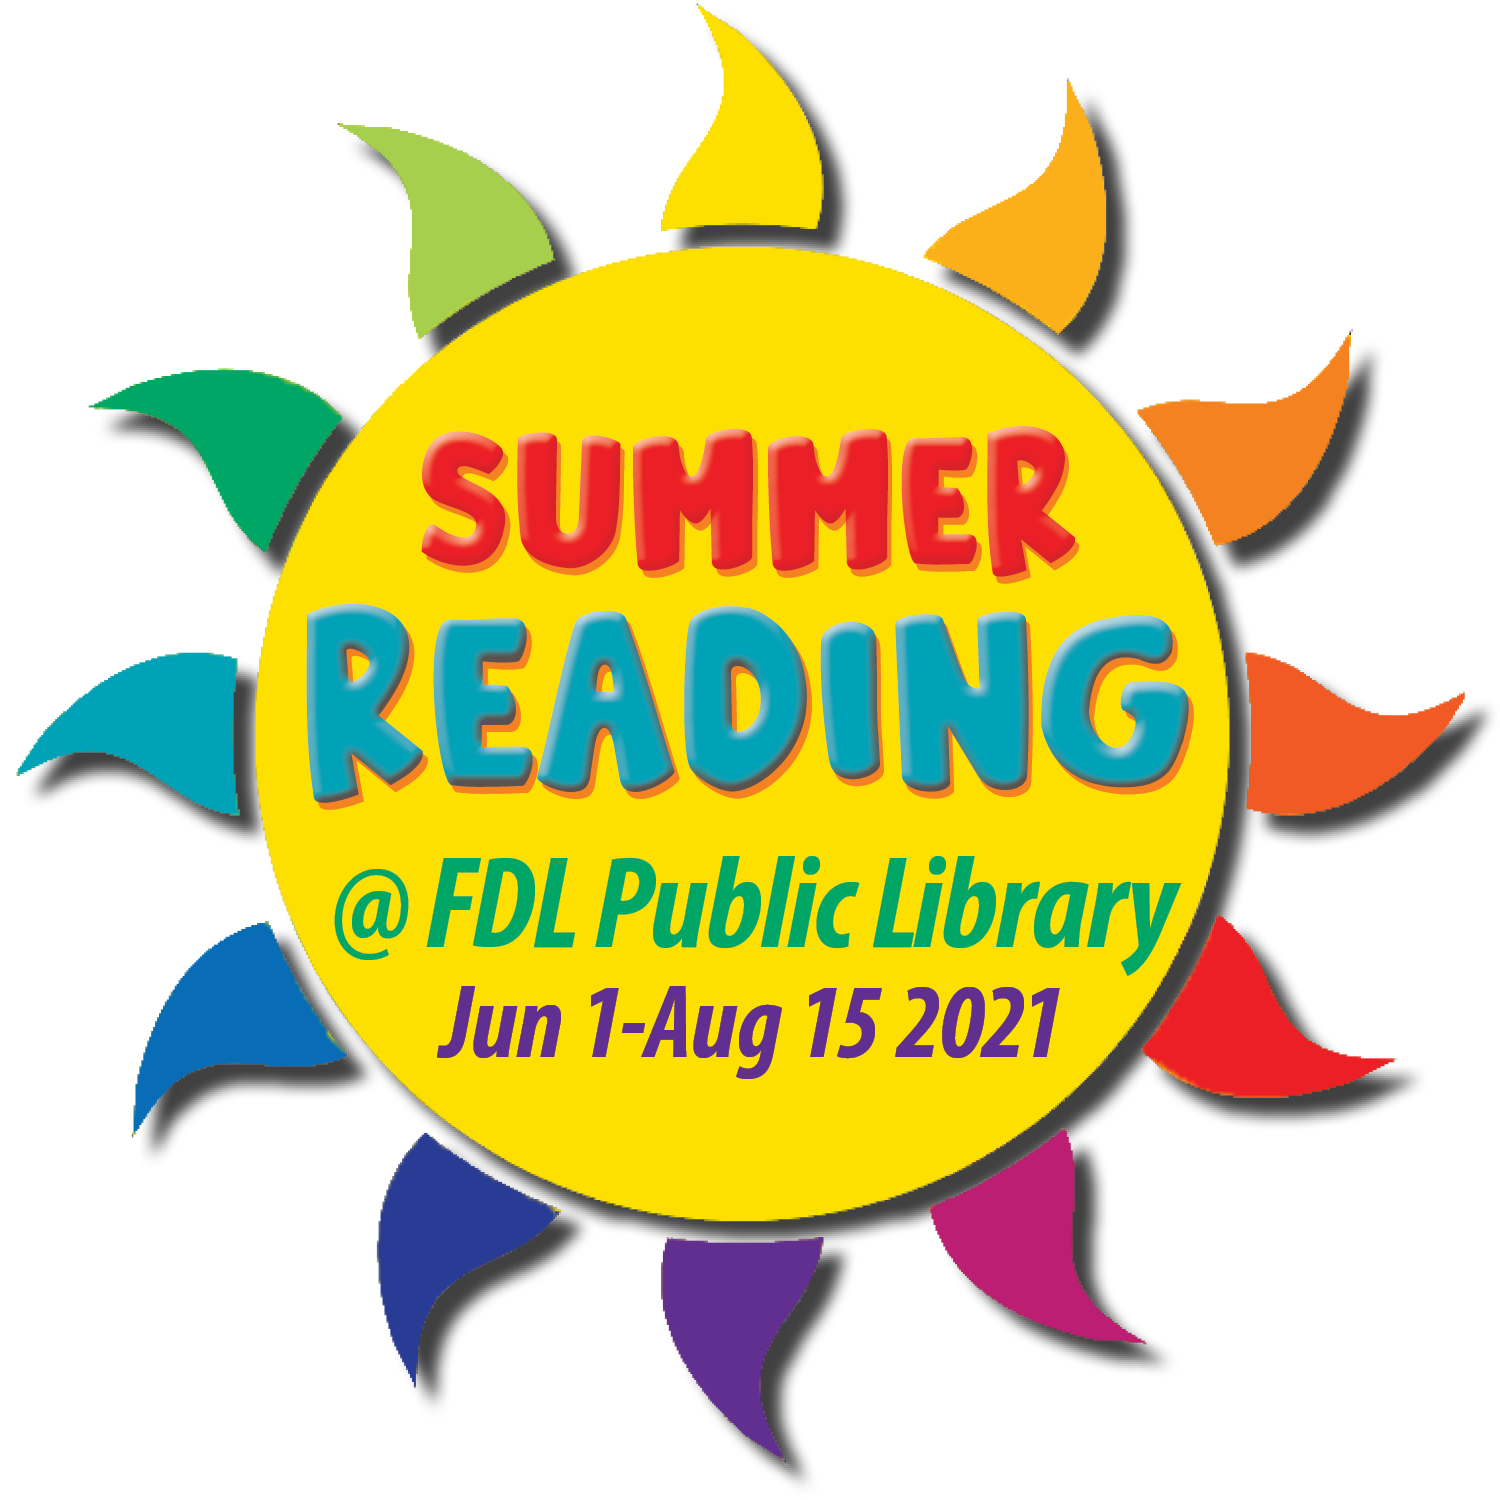 Summer Reading at FDLPL starts in just a few short weeks